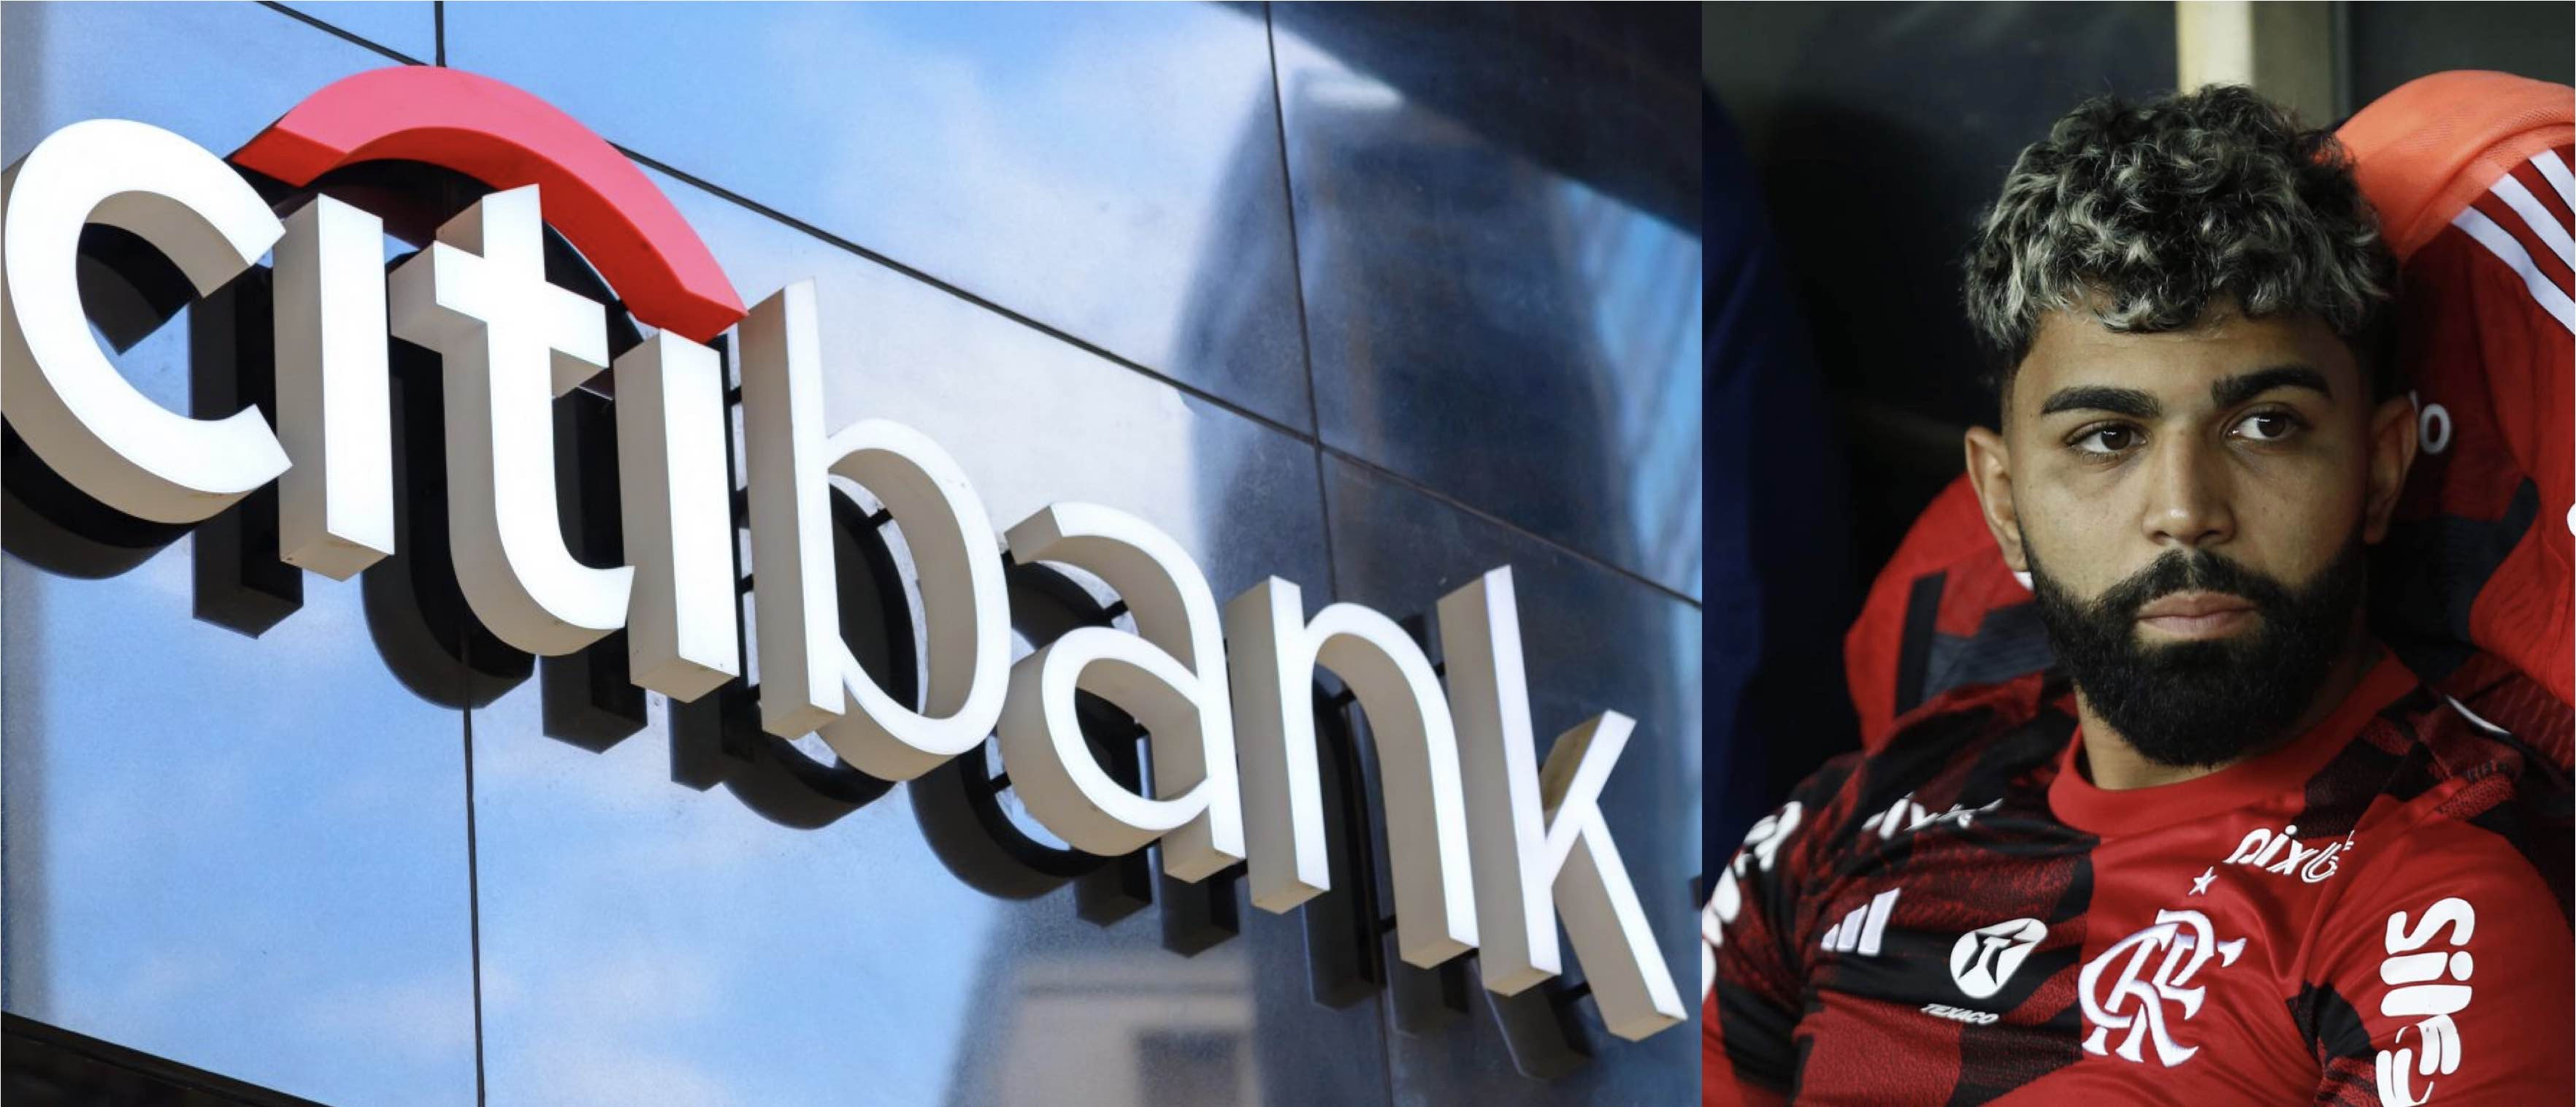 Citibank To Offer GabiGol A Multimillion Dollars Contract